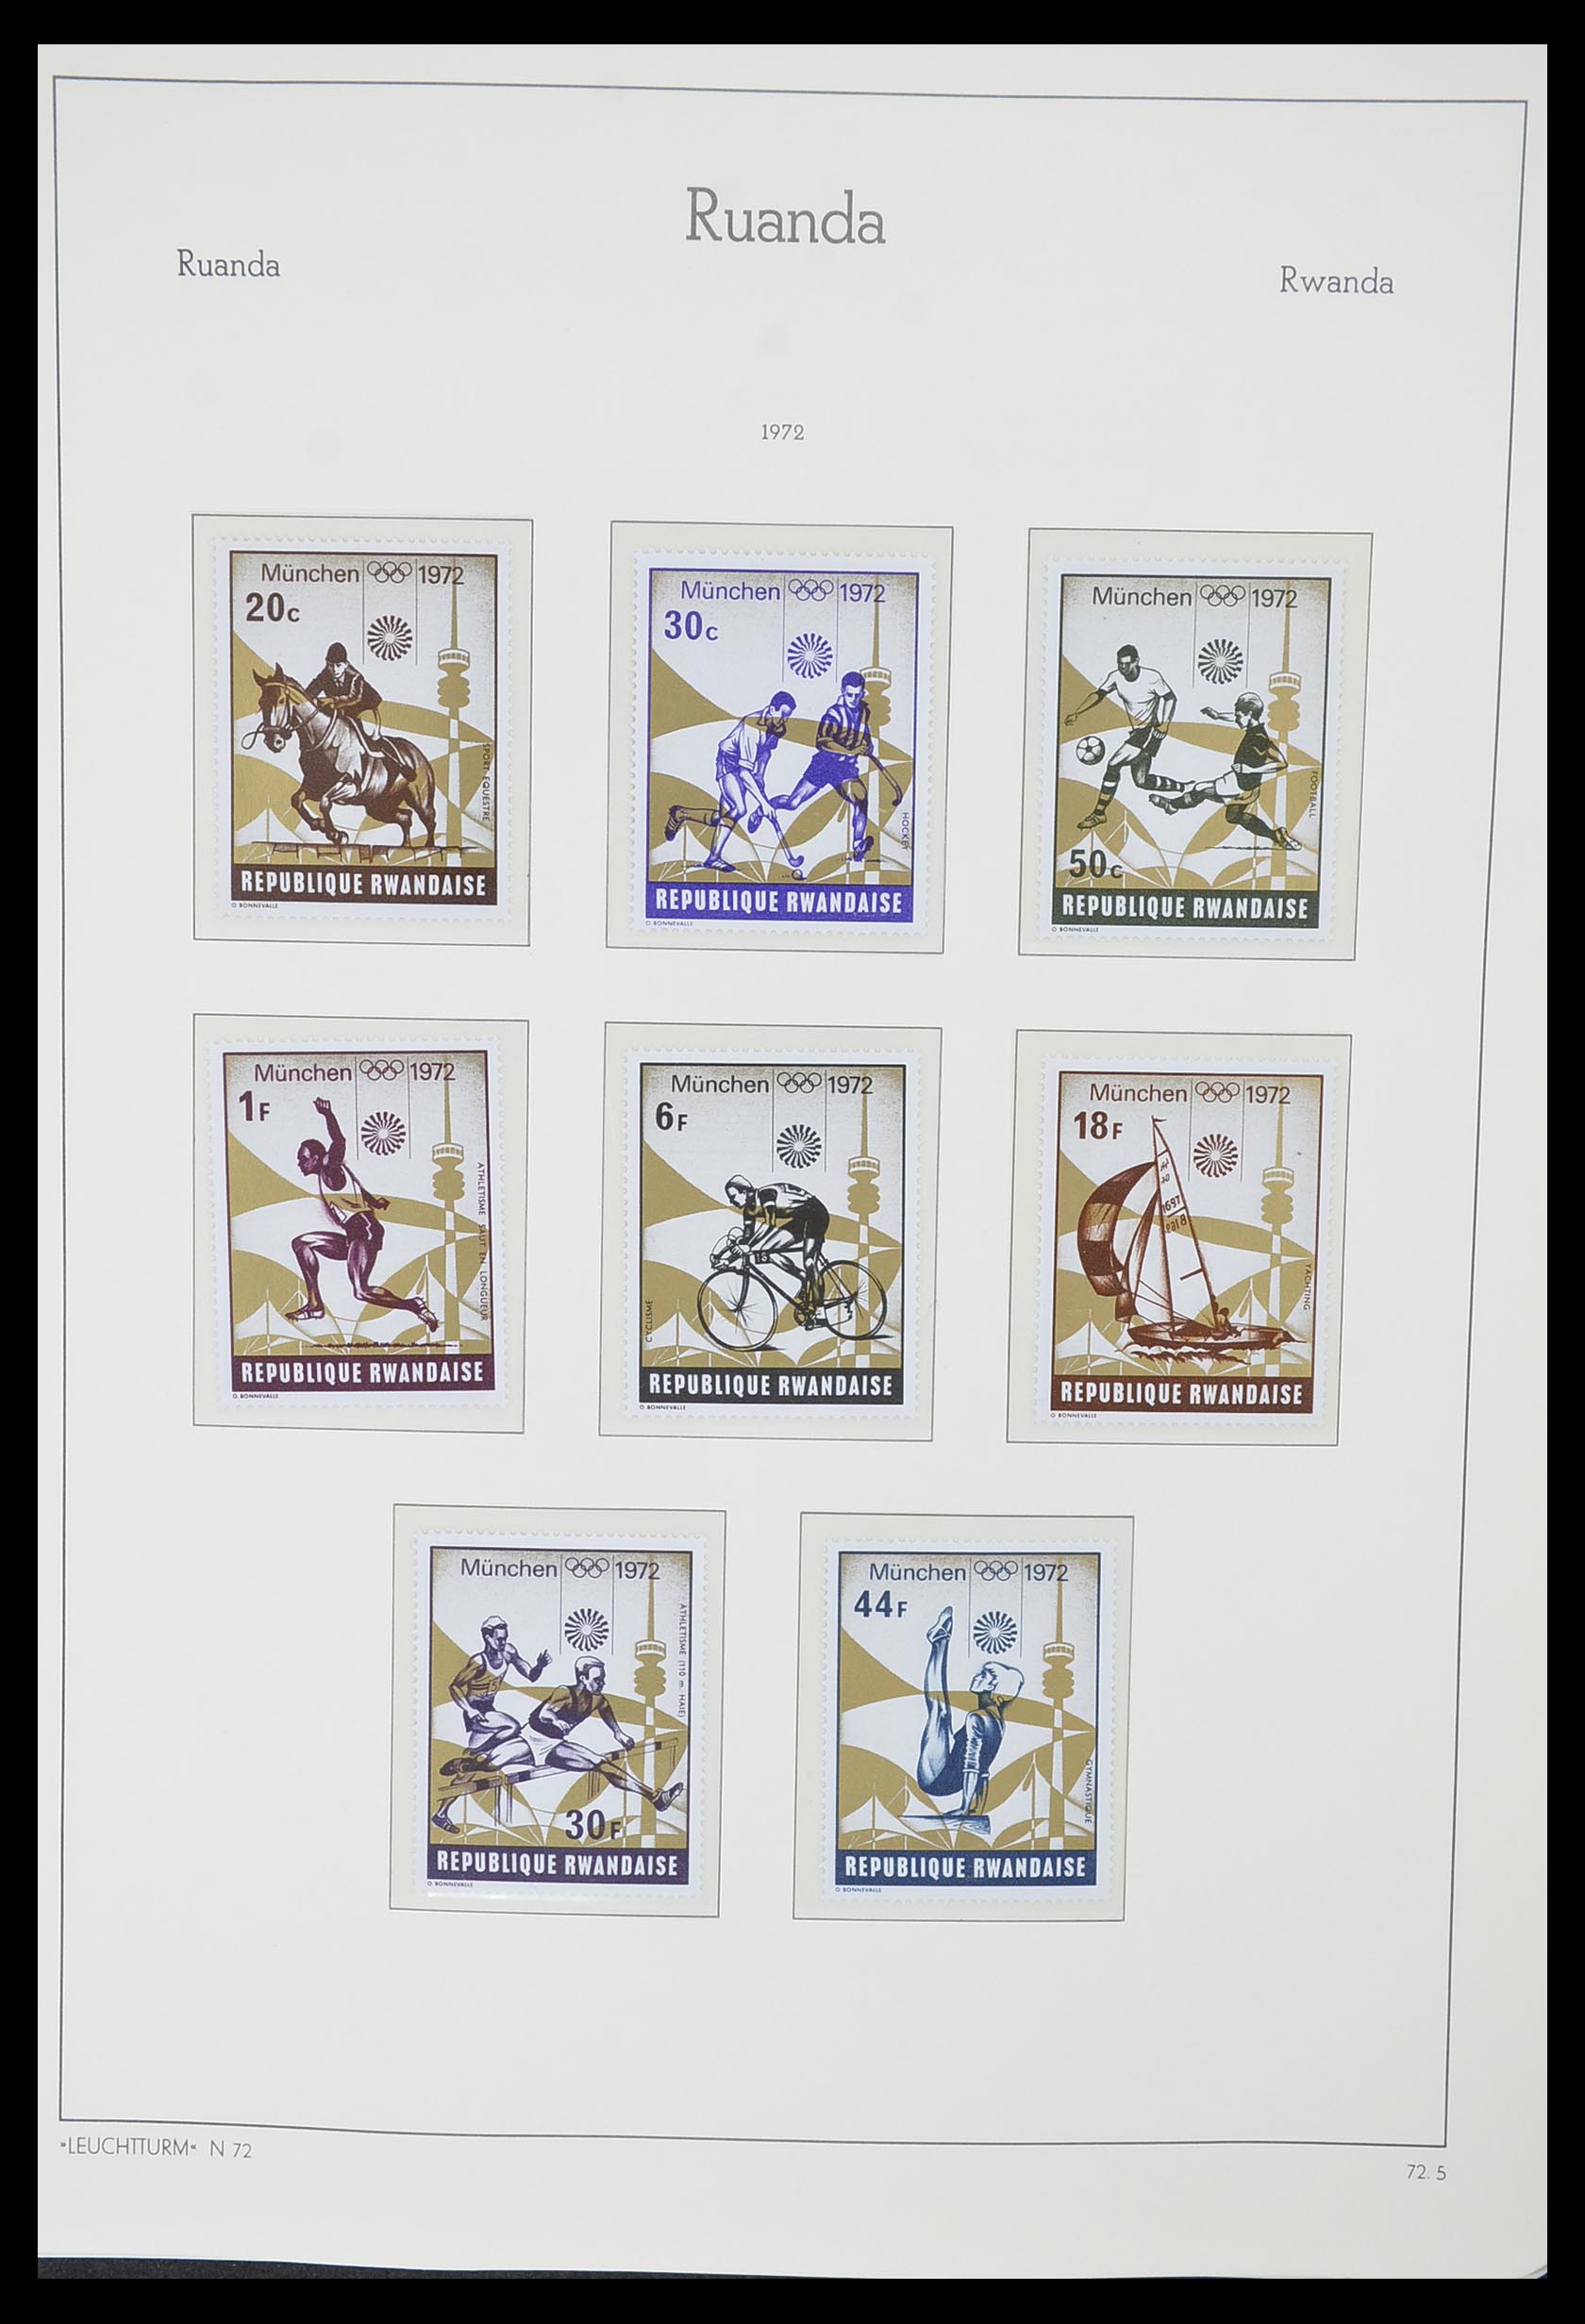 33767 072 - Stamp collection 33767 Rwanda 1962-1988.